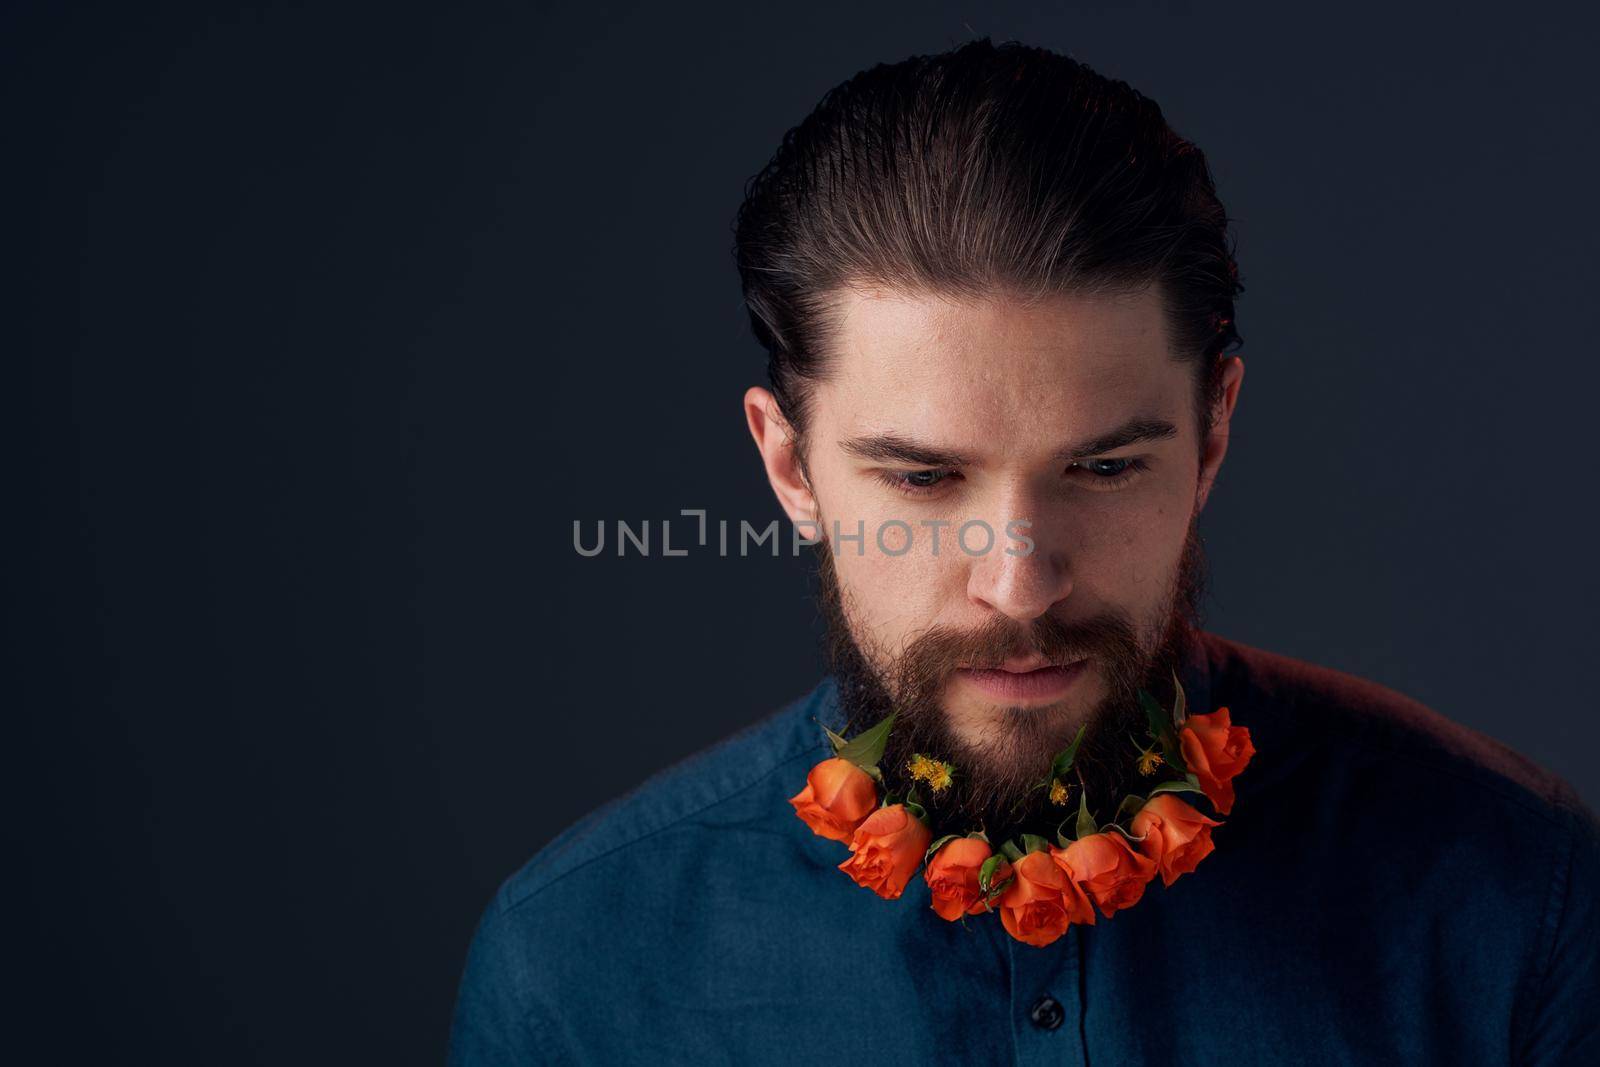 Bearded man flowers in a beard close-up romance dark background. High quality photo